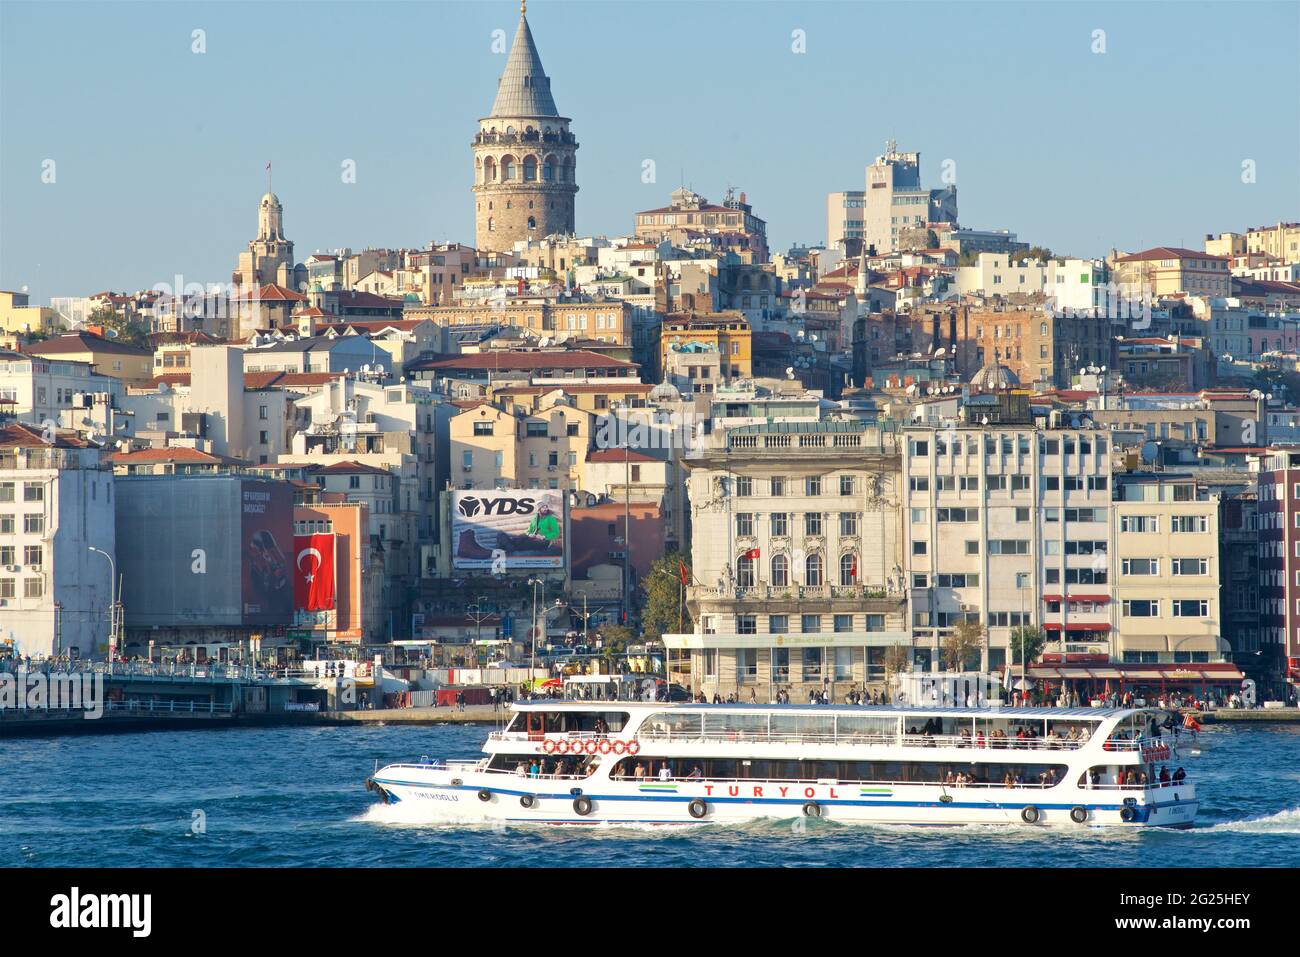 The Galata Tower, Galata Kulesi, Beyoglu district  across the Golden Horn waterway, Istanbul, Turkey Stock Photo